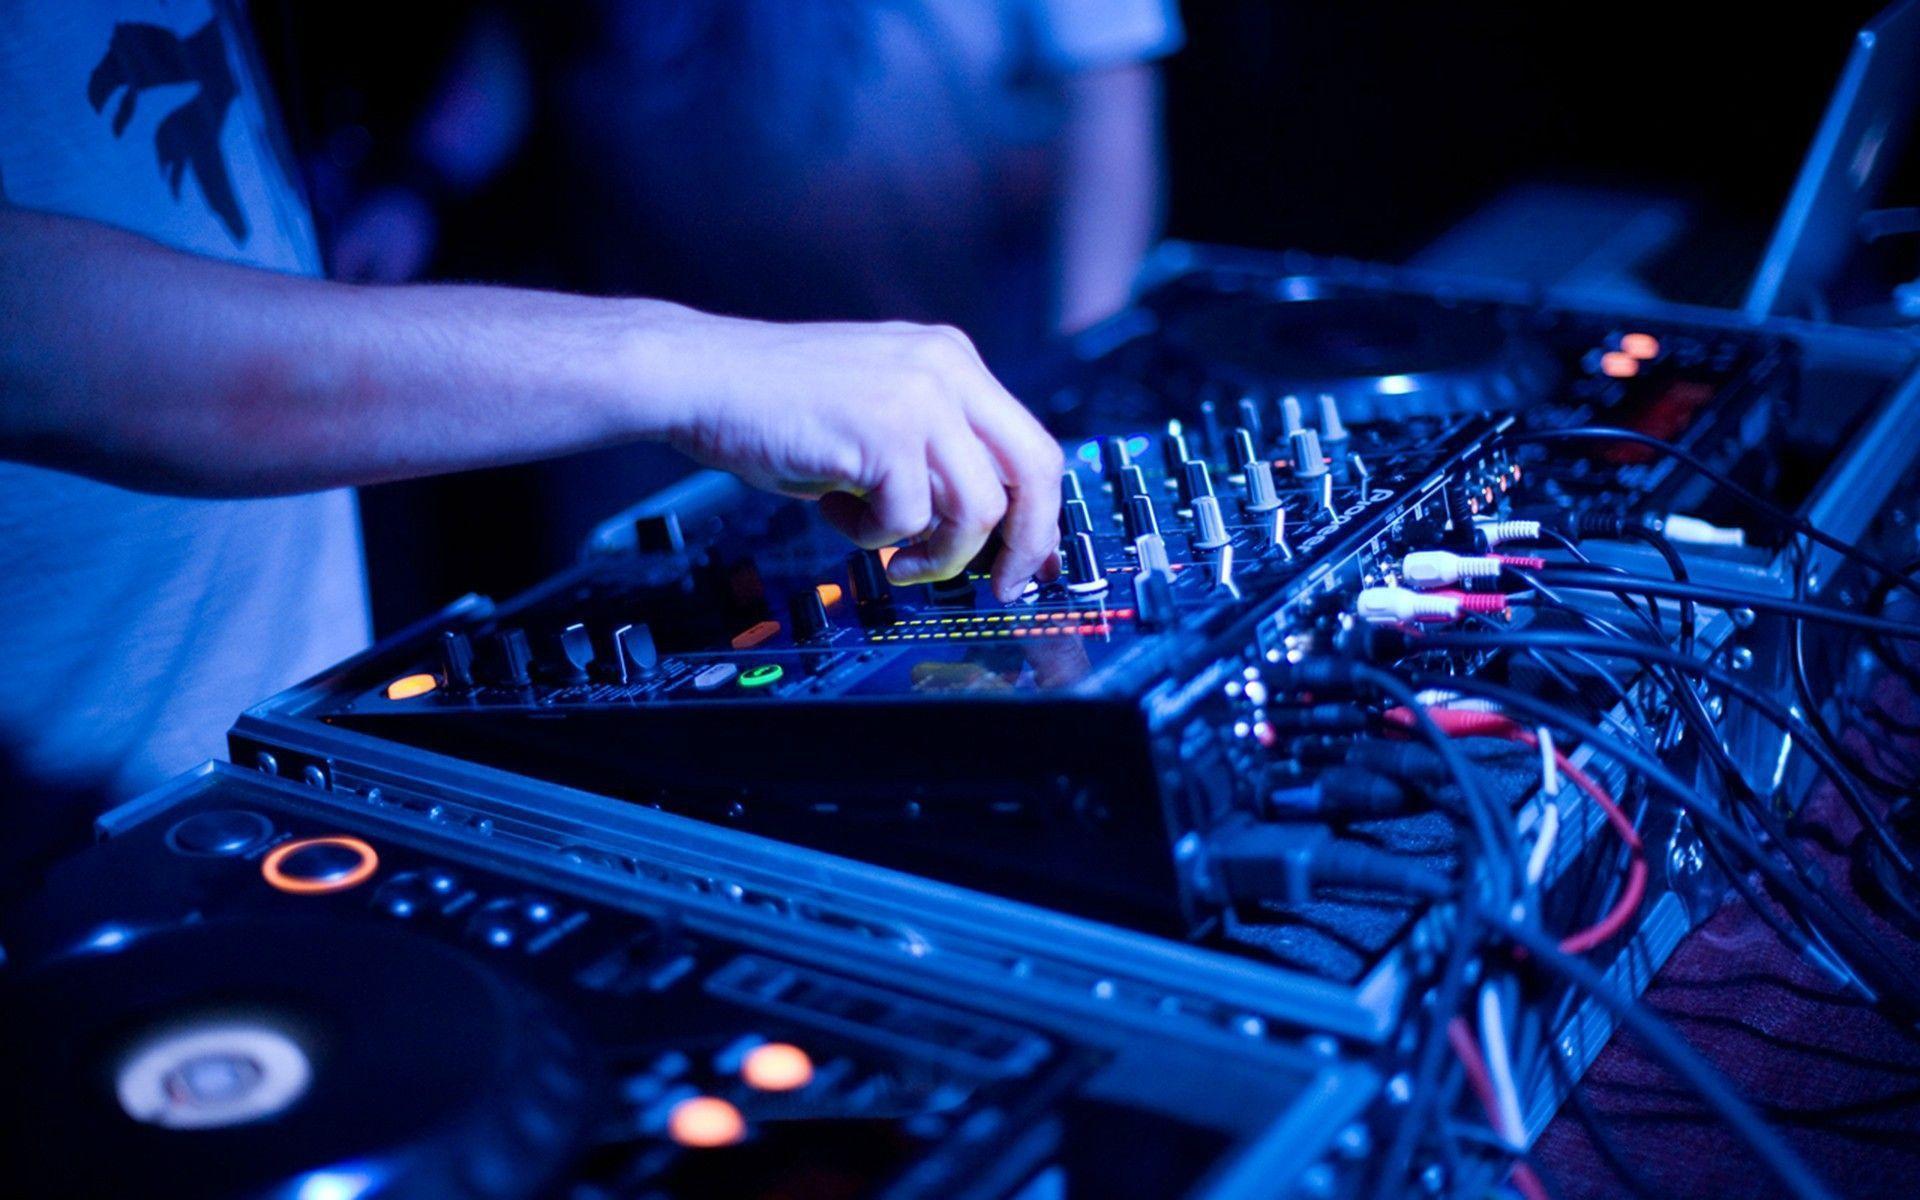 DJ equipment for mixing music